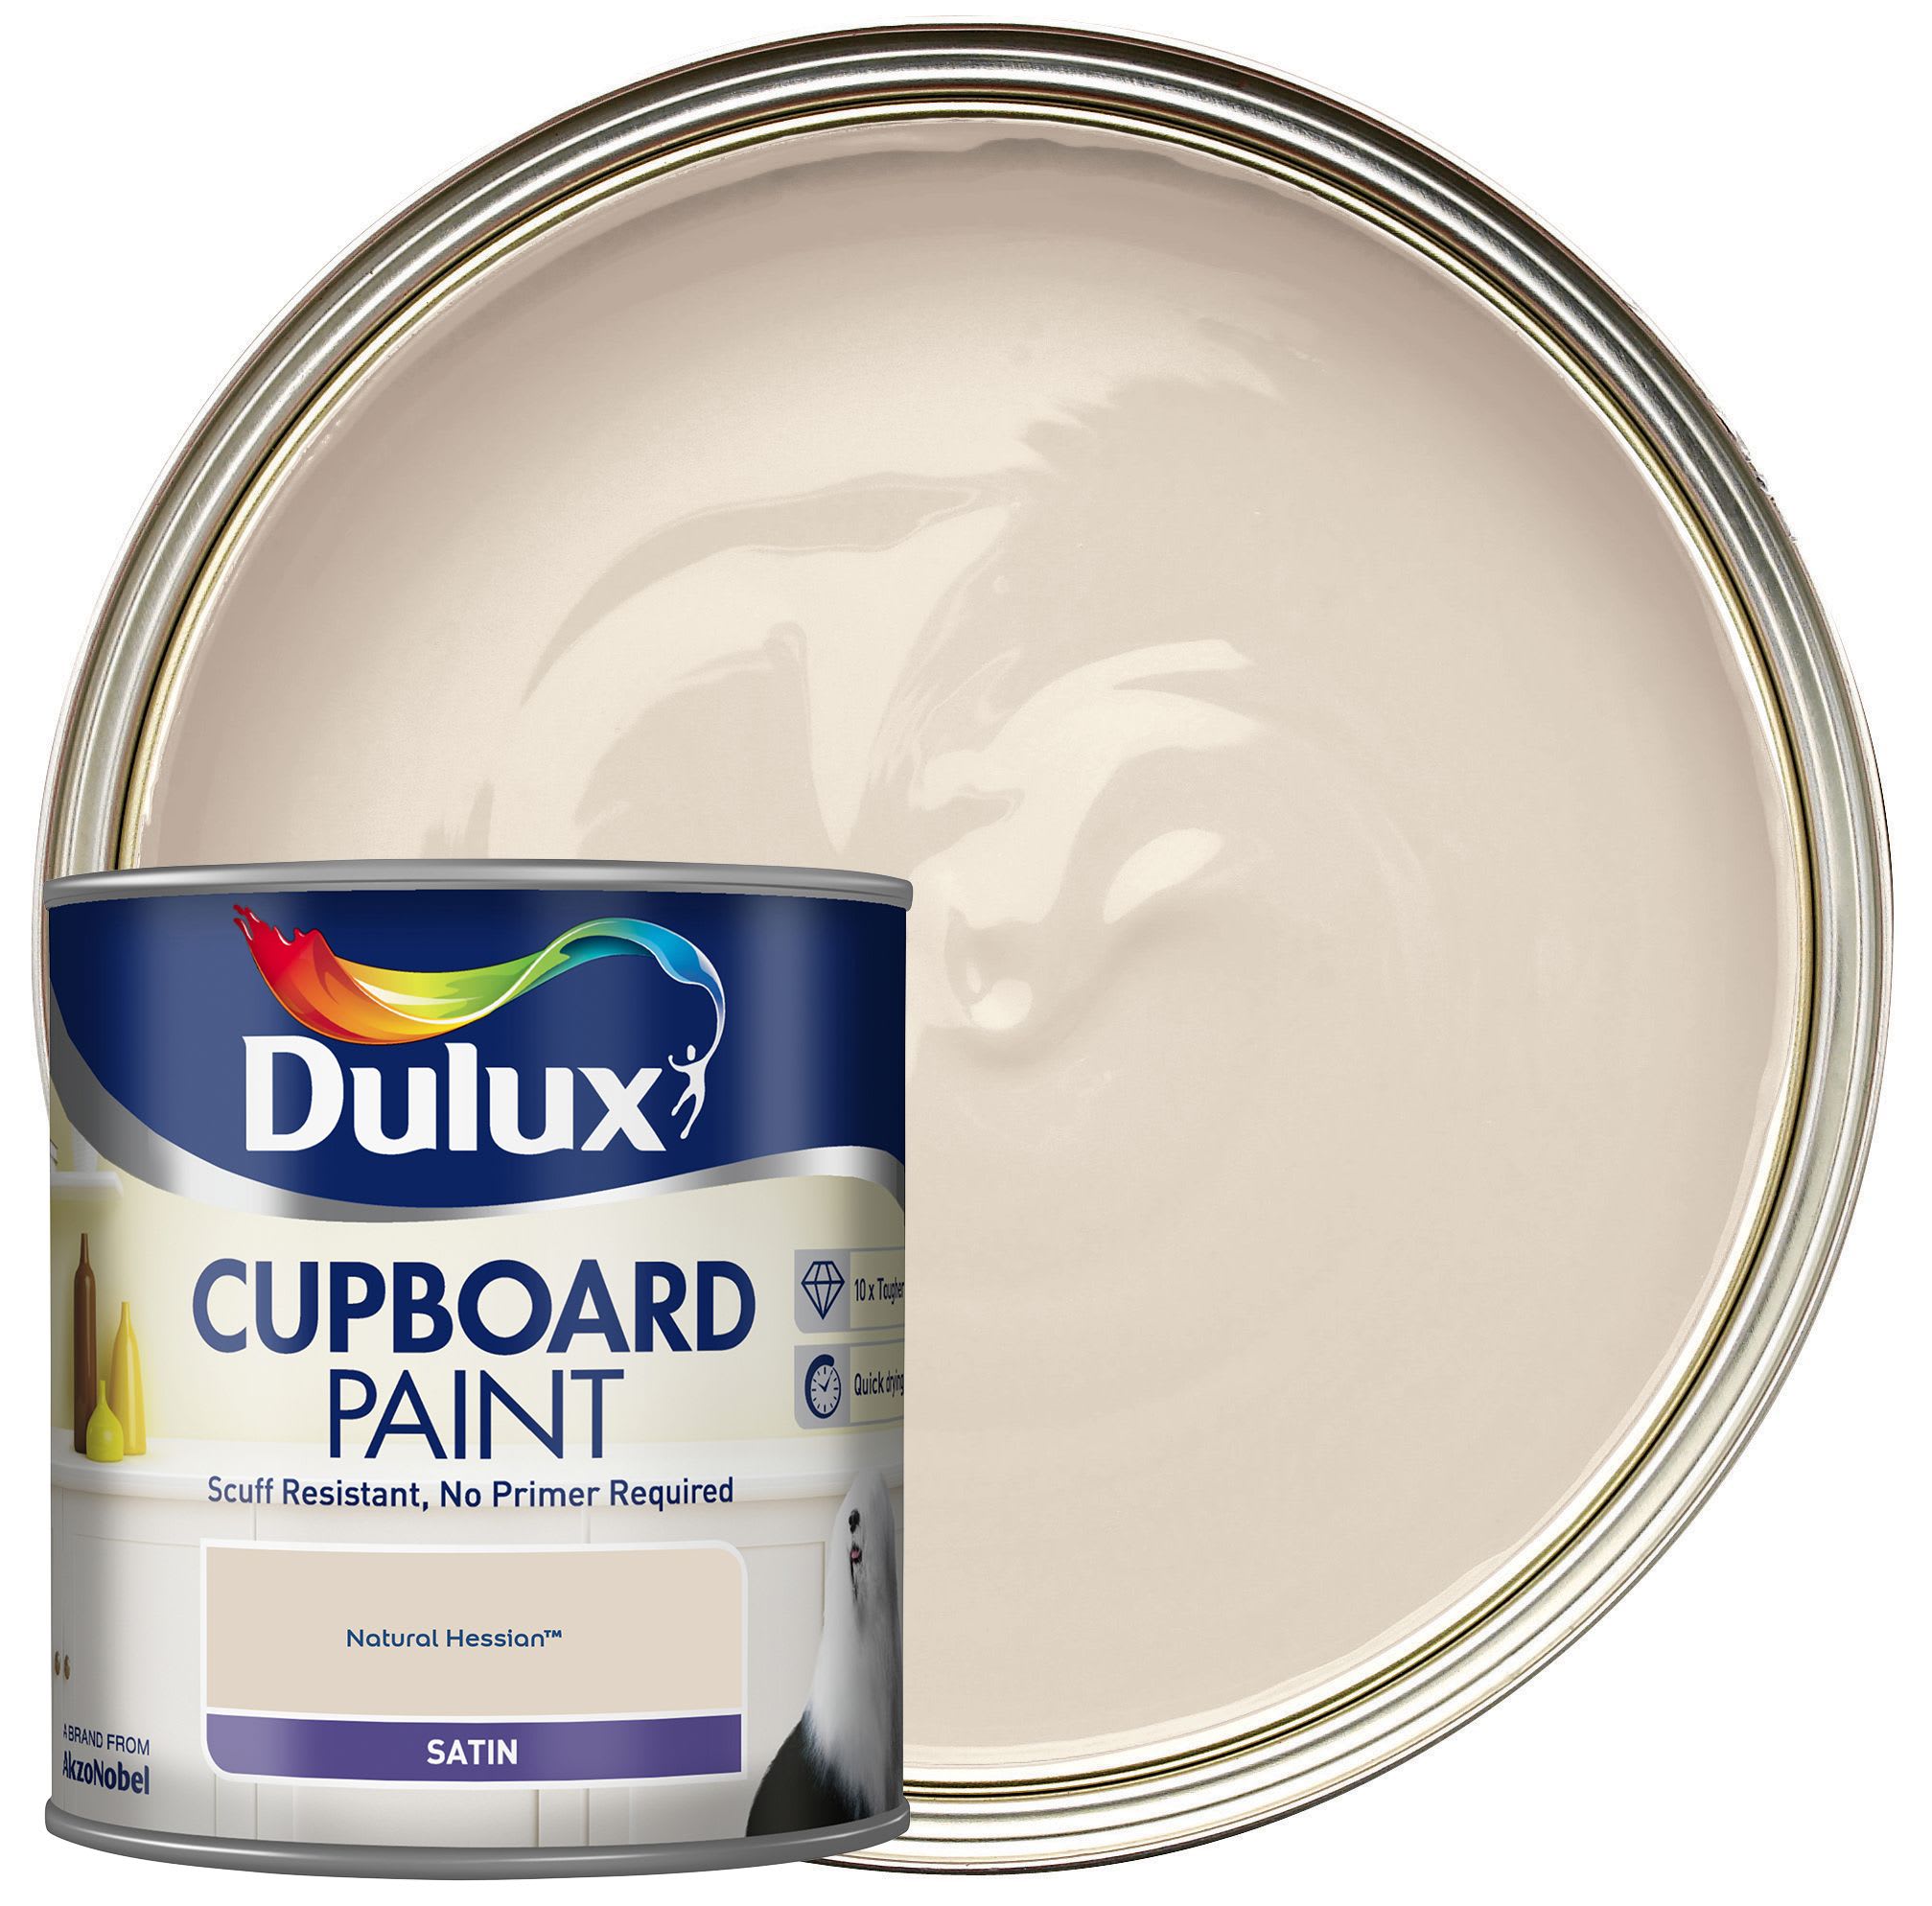 Dulux Cupboard Paint - Natural Hessian - 600ml